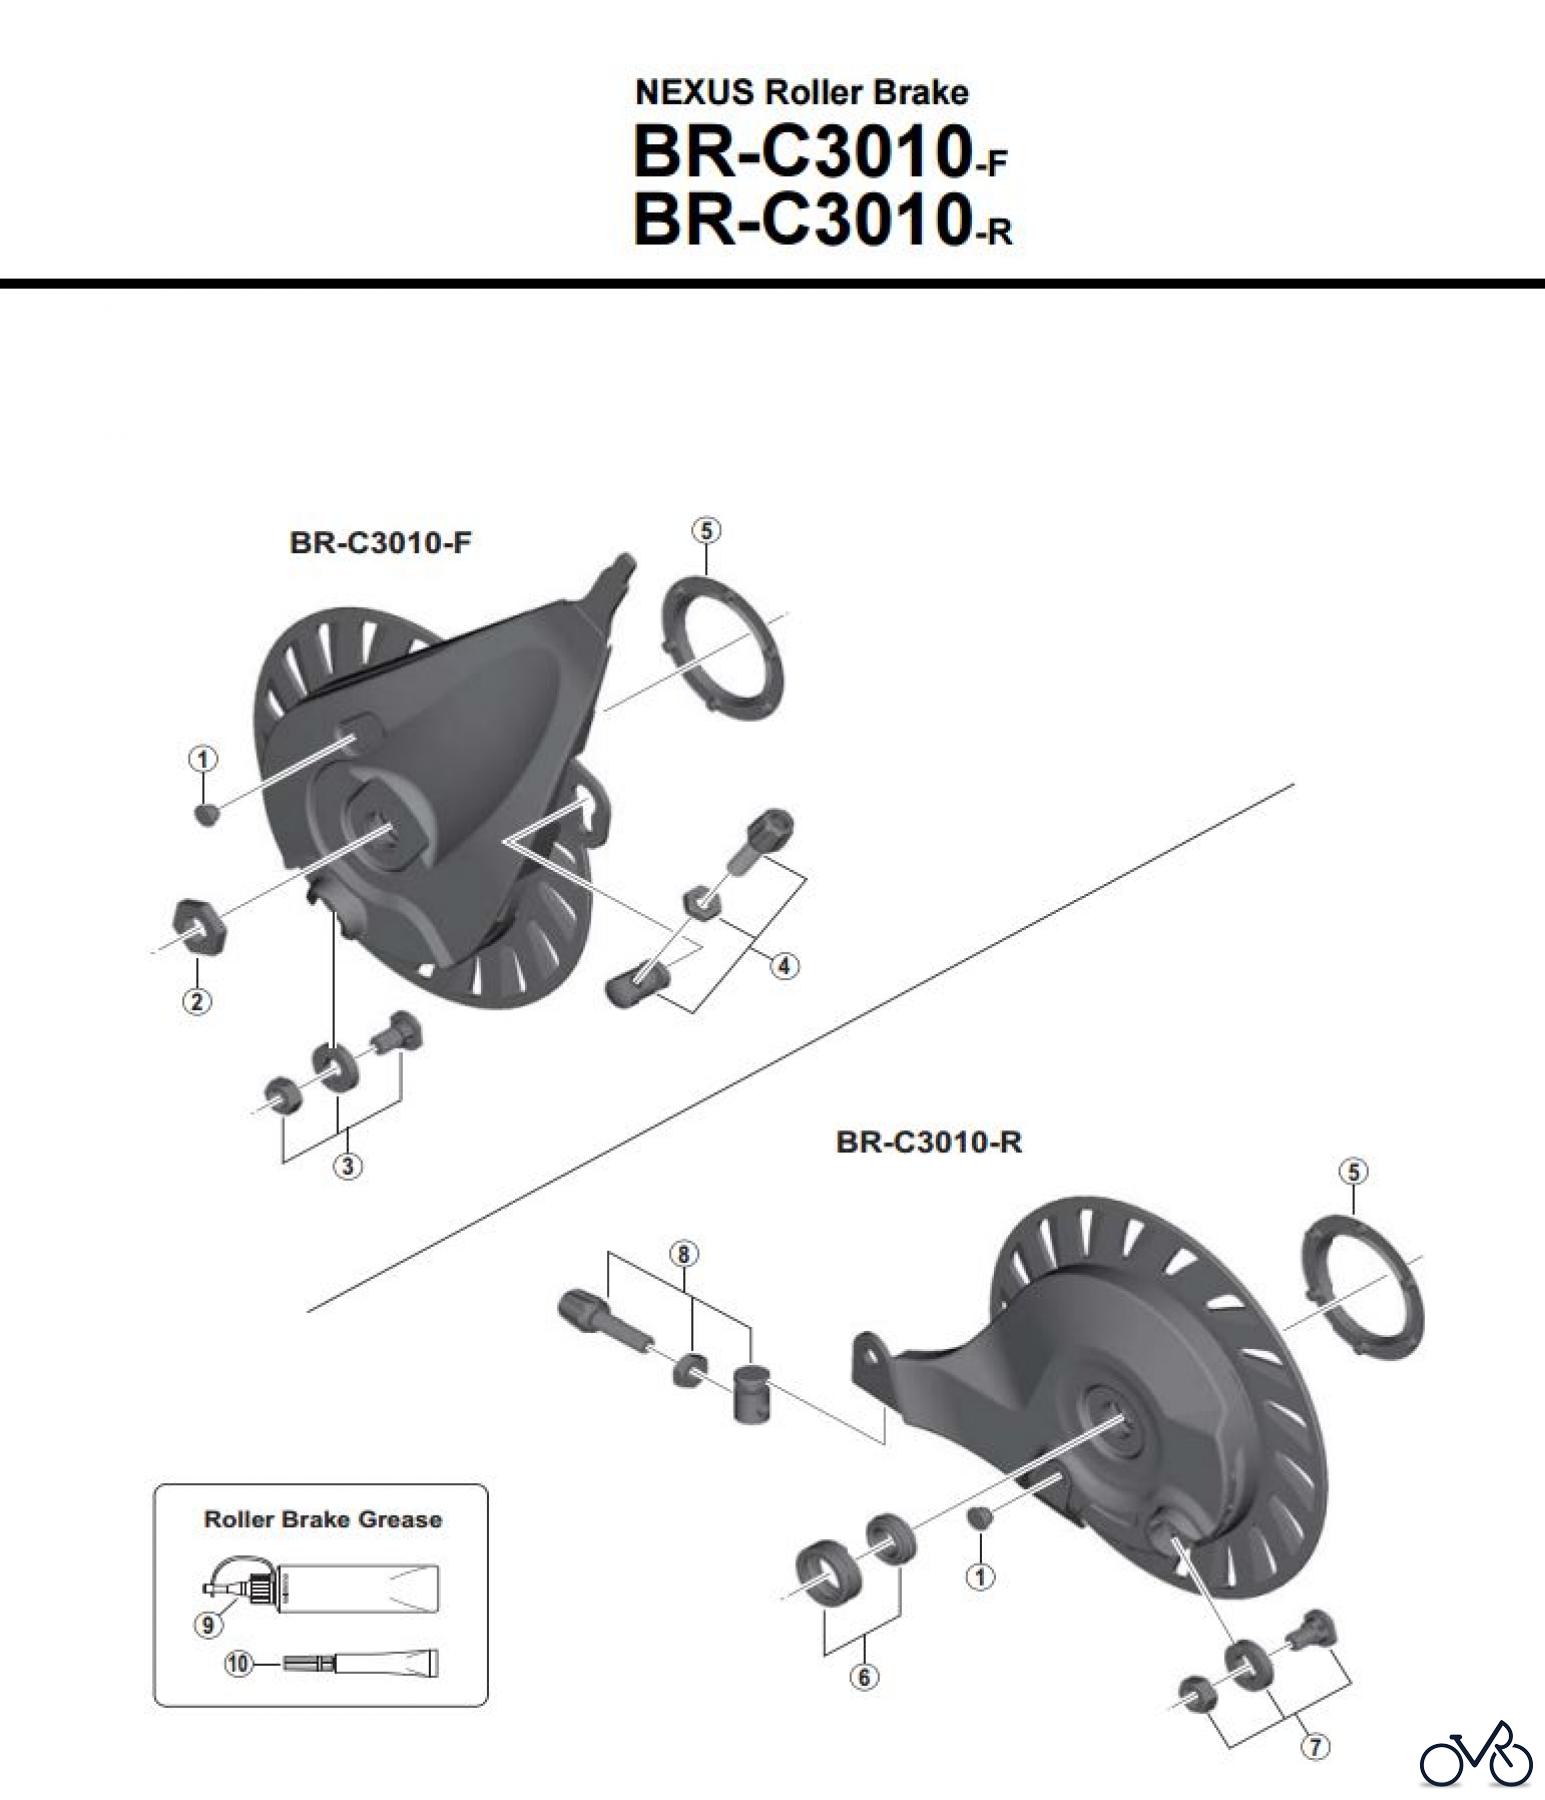  Shimano BR Brake - Bremse BR-C3010-F_R -3748A NEXUS Roller Brake